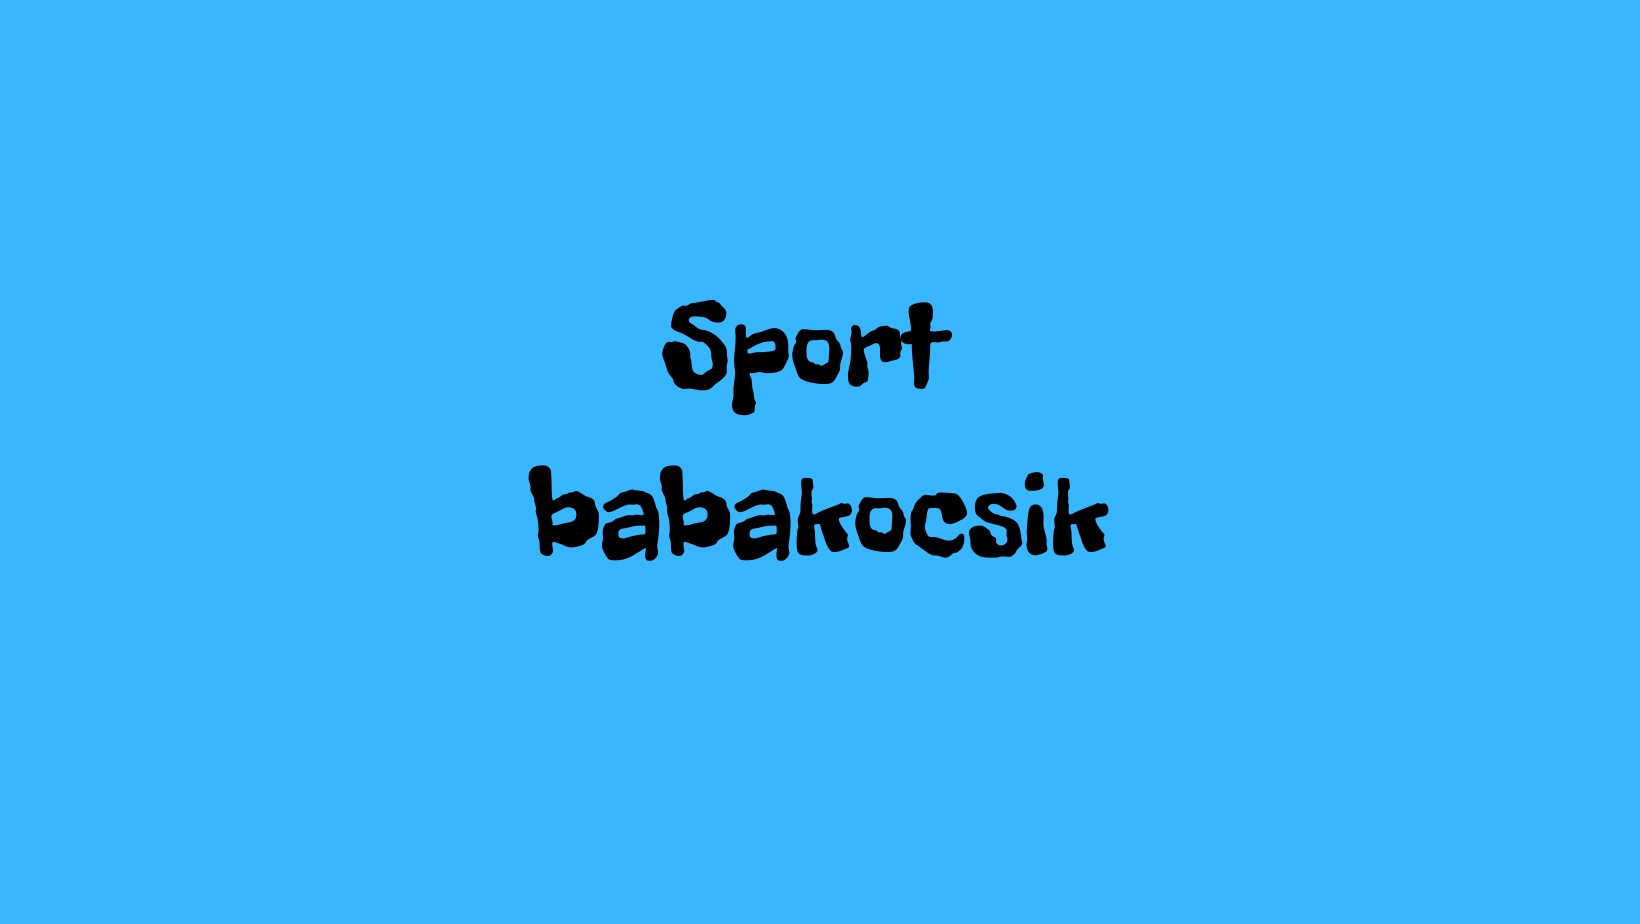 Sport babakocsik